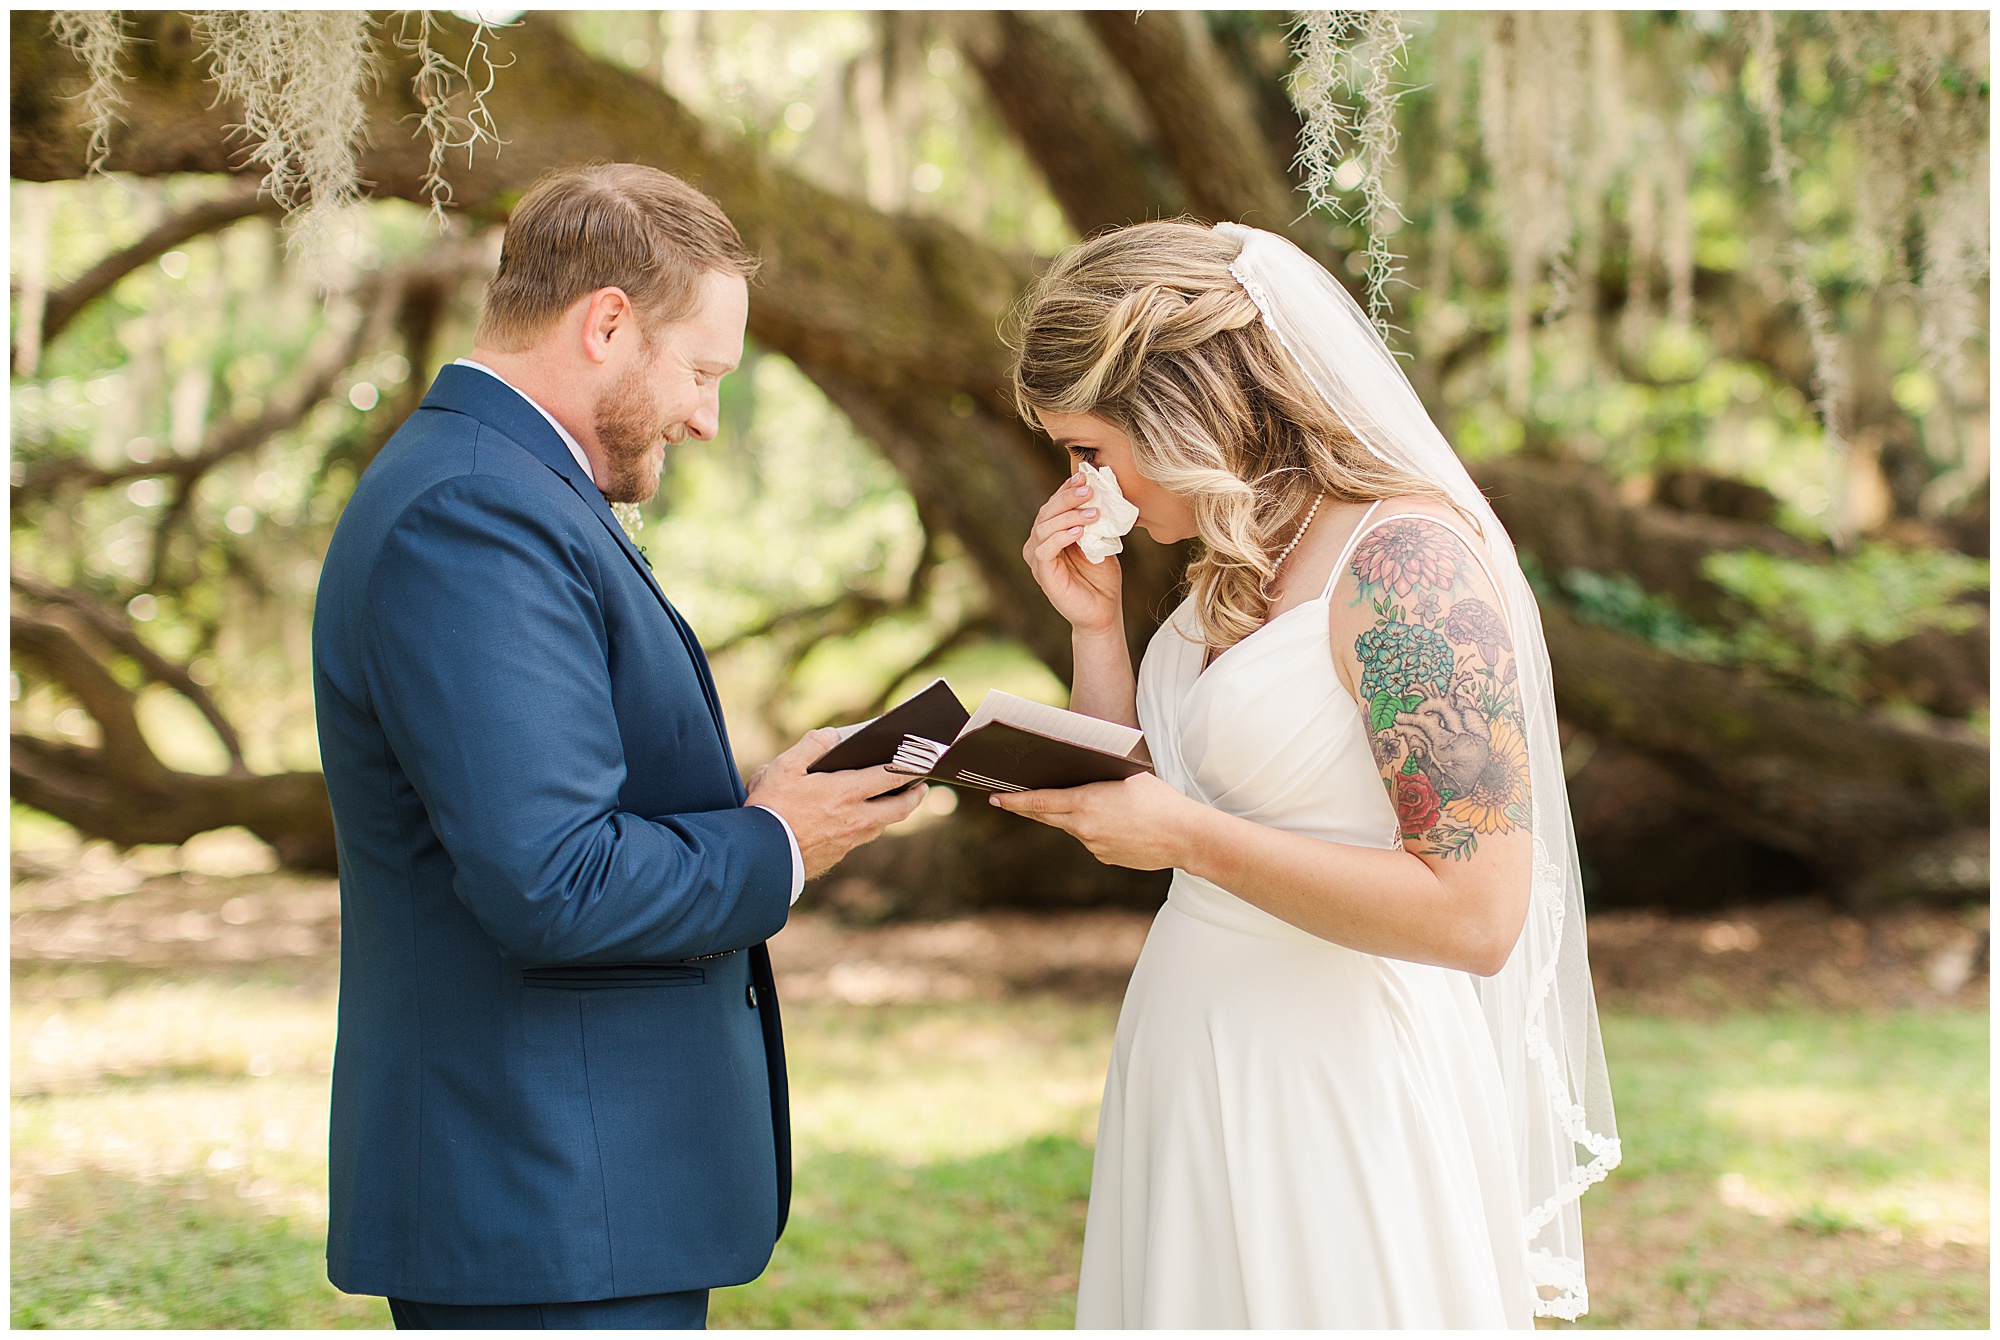 Molly & Steven, Red Gate Farms wedding, Kelley Stinson Photography, Savannah, Georgia, vows